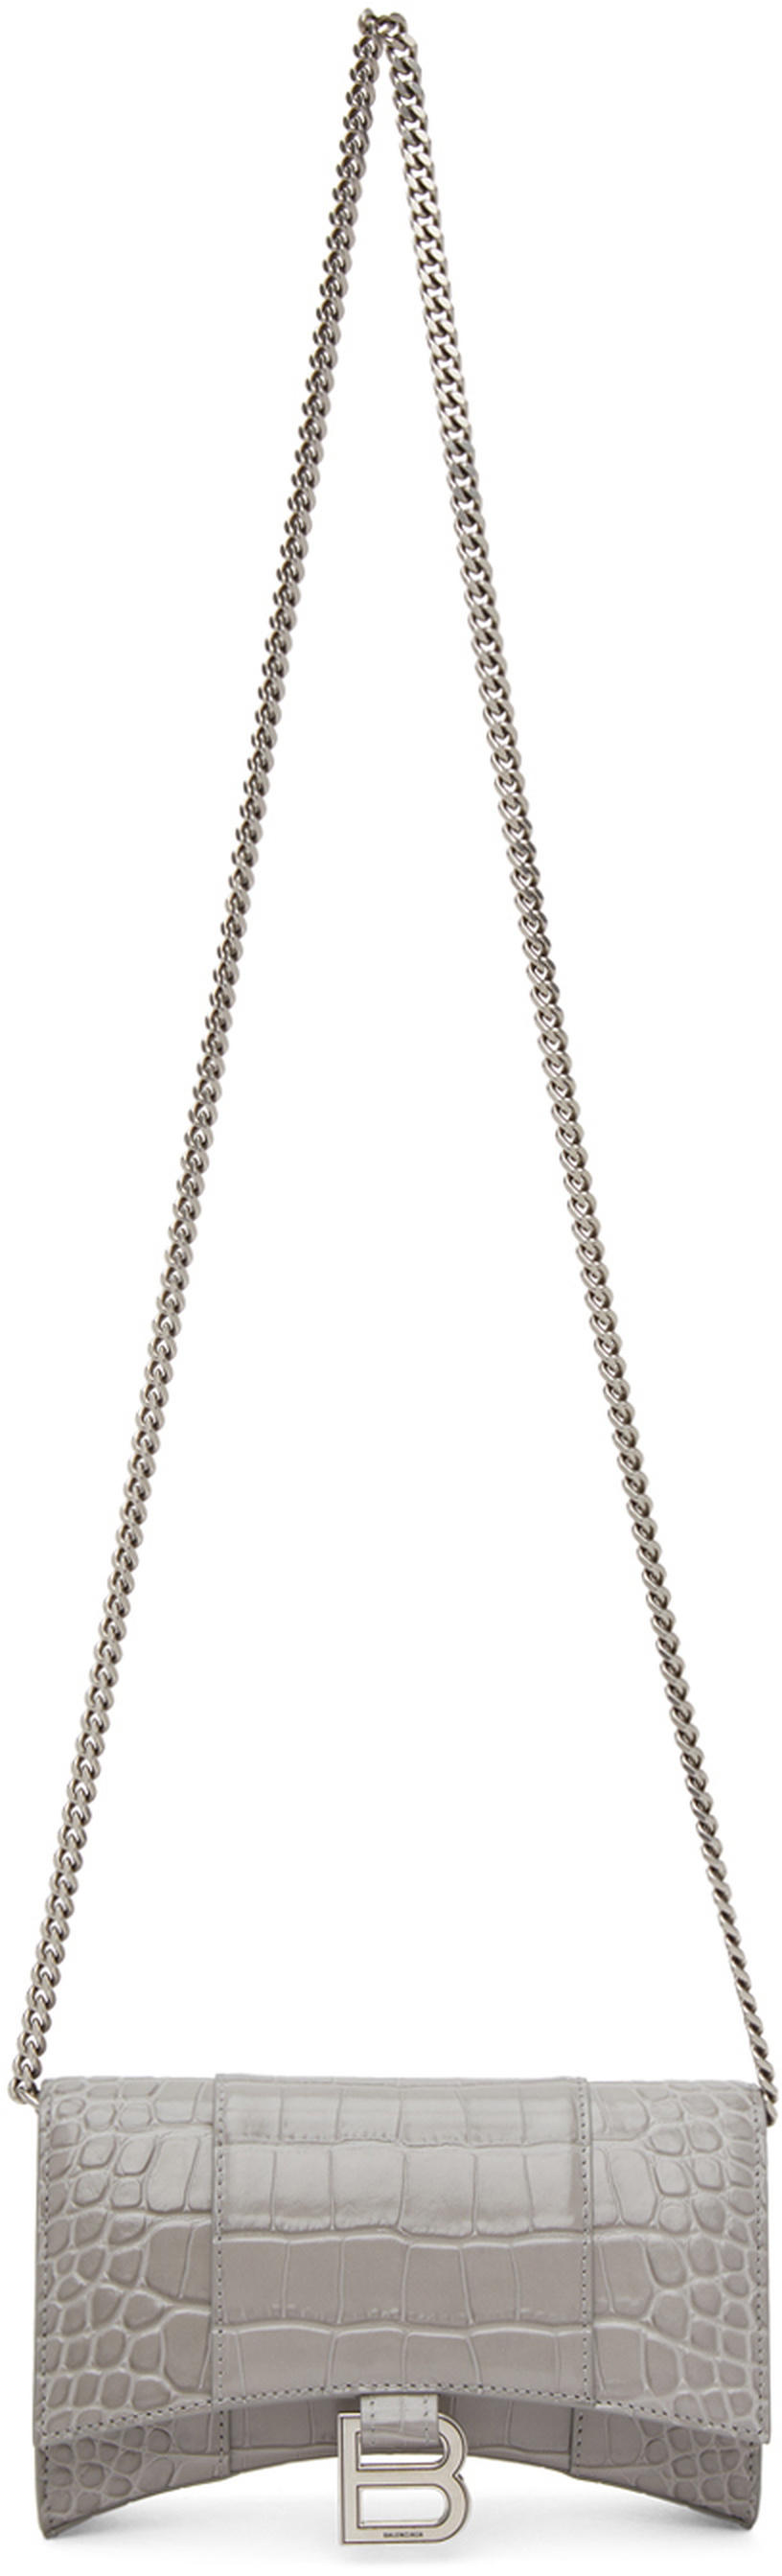 Balenciaga Hourglass Chain Wallet - Grey